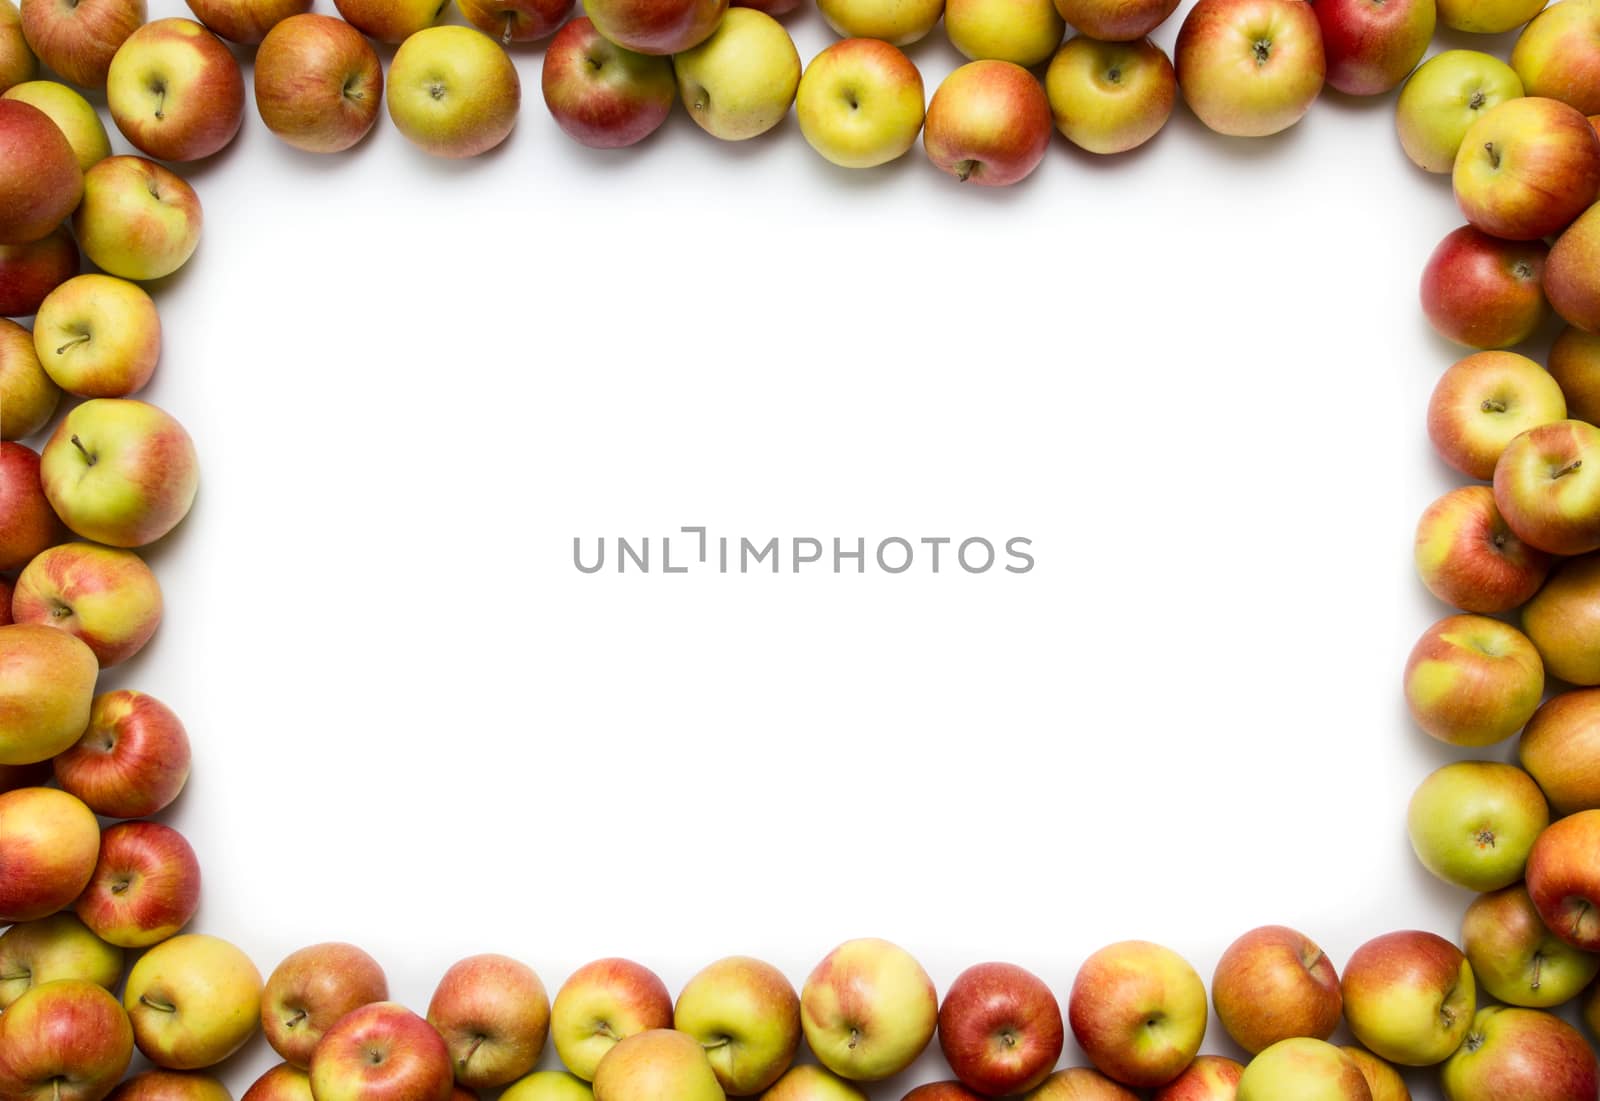 Apples by Valengilda